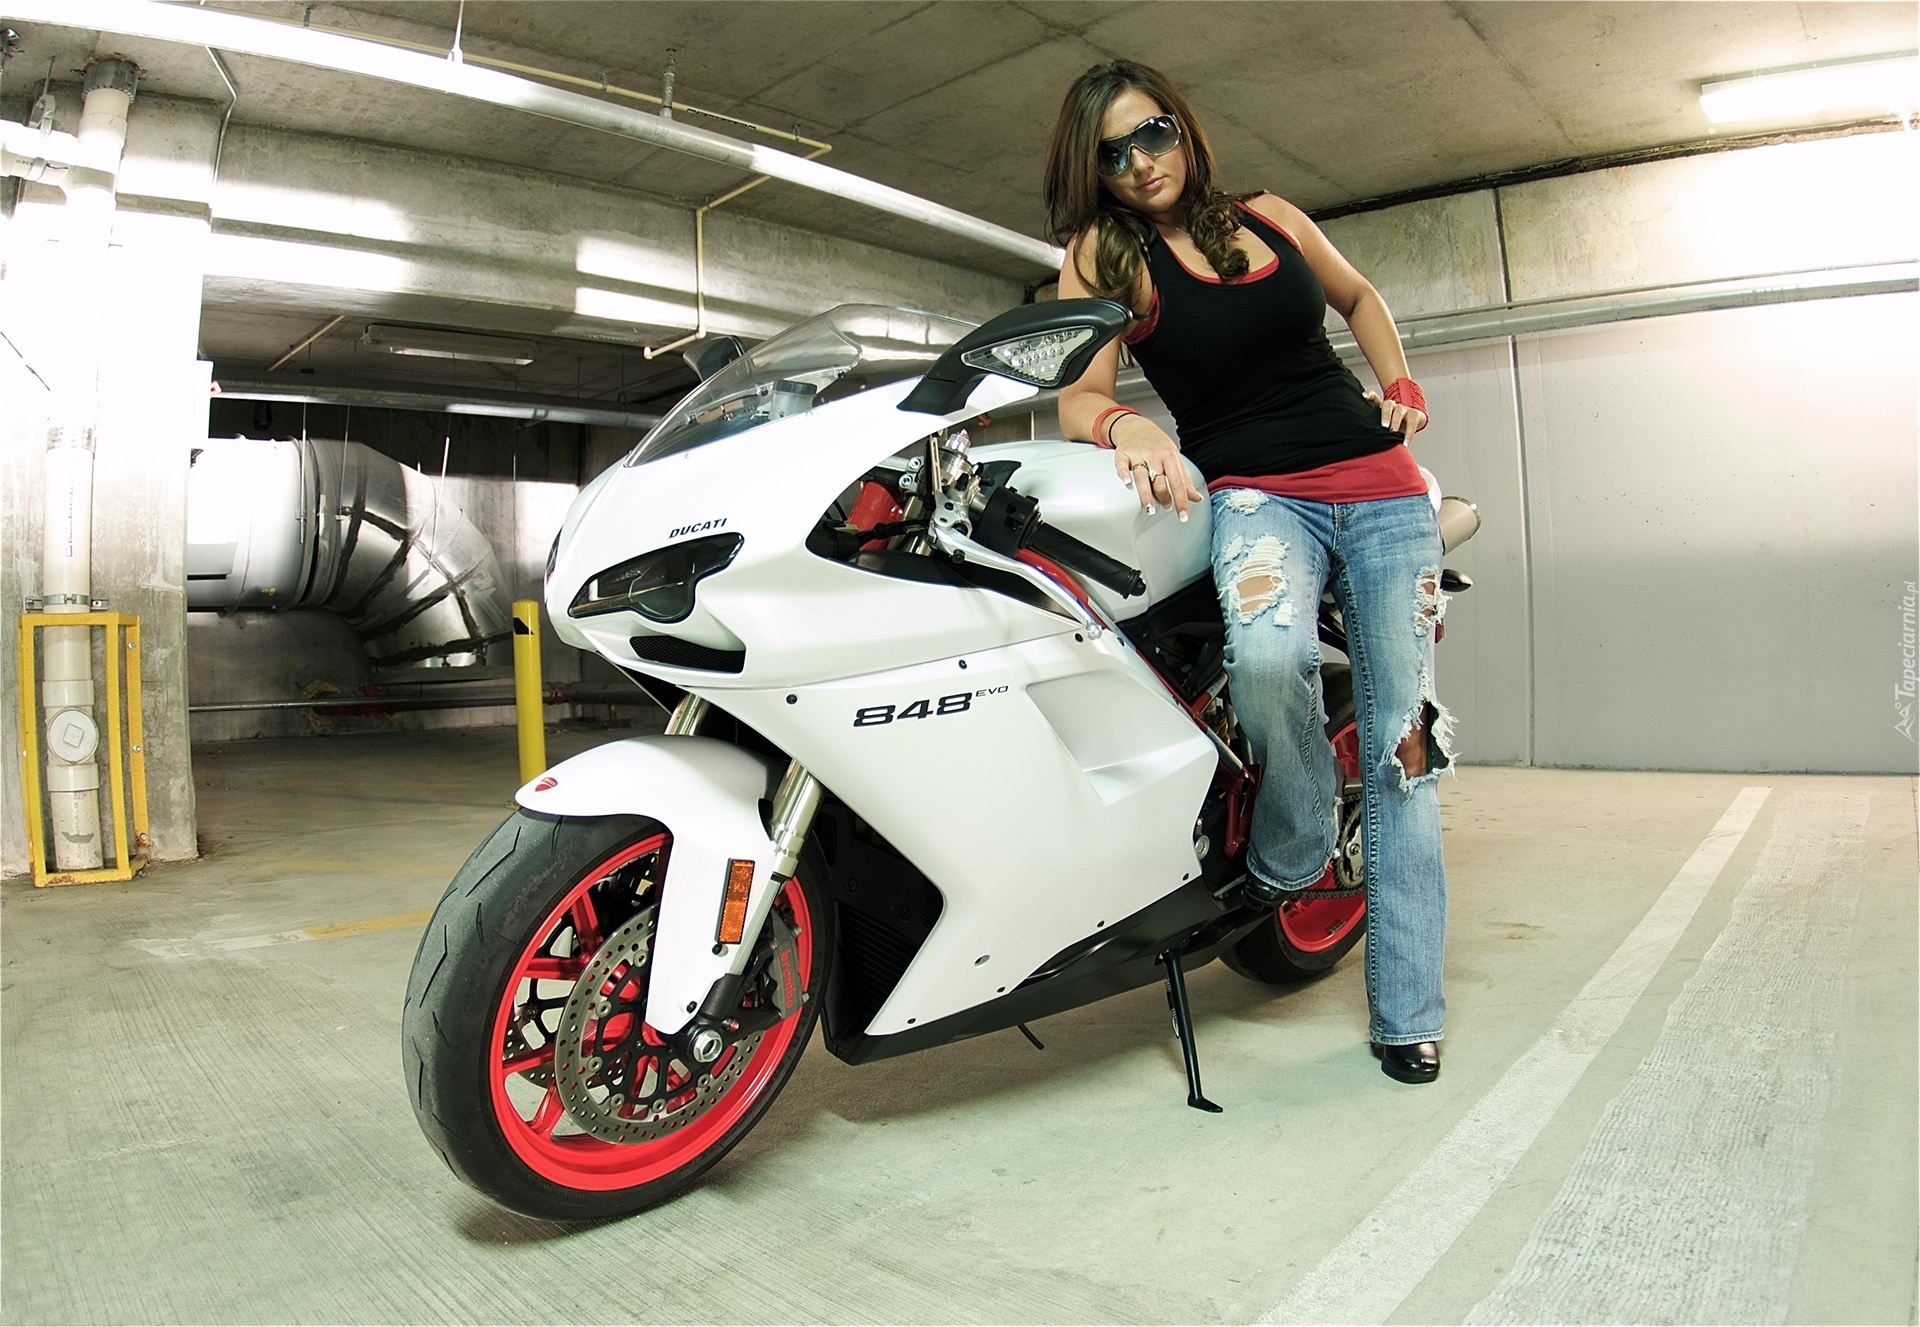 Motocykl Ducati 848, Kobieta, Okulary